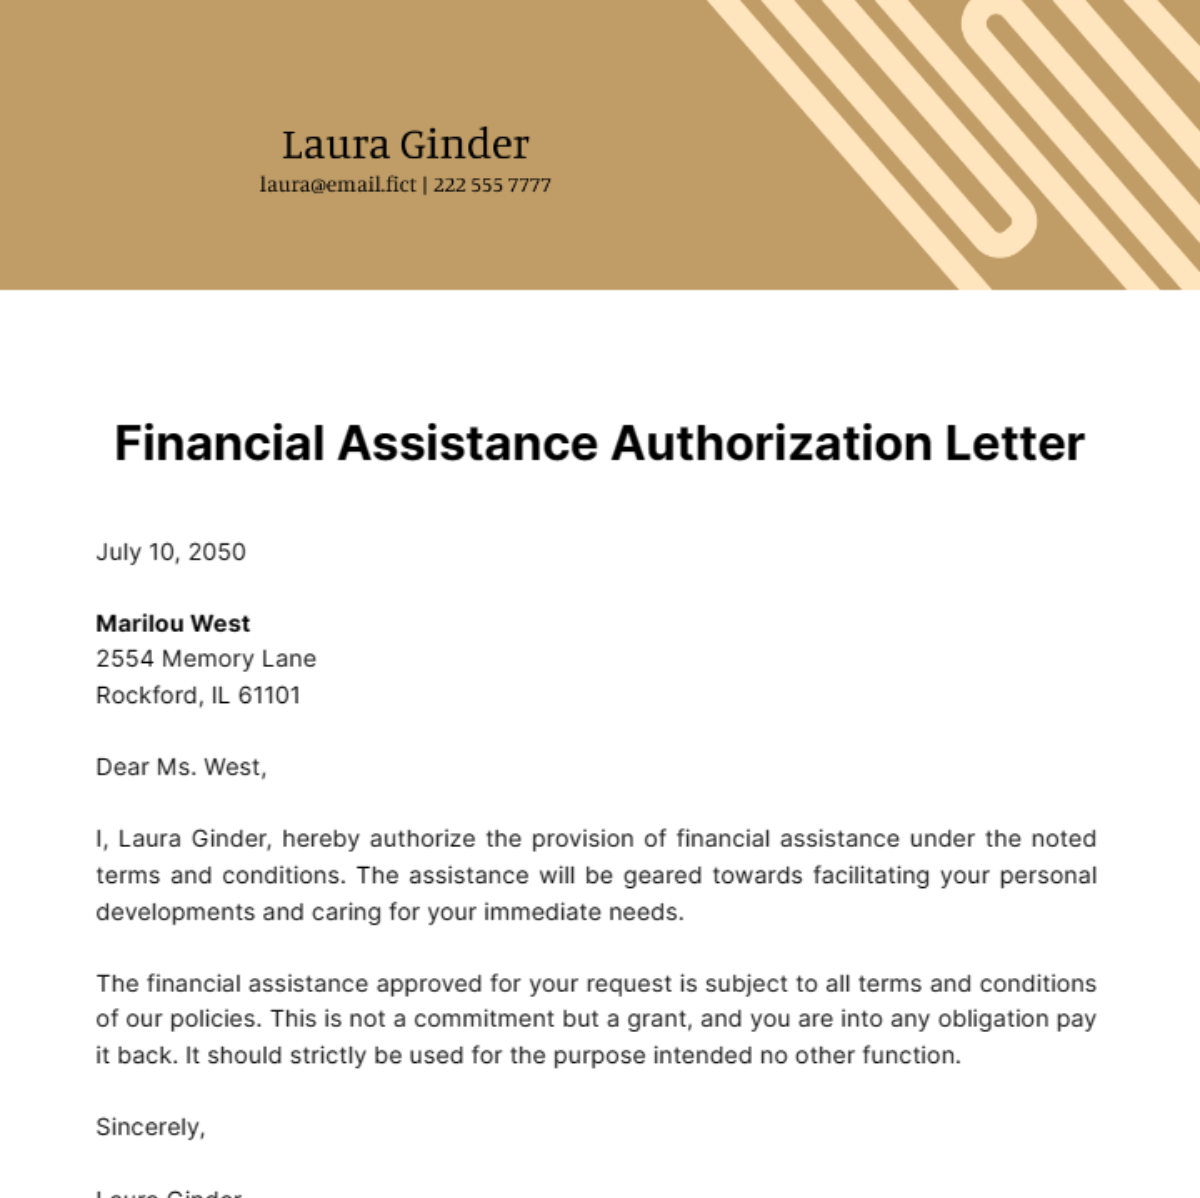 Financial Assistance Authorization Letter Template